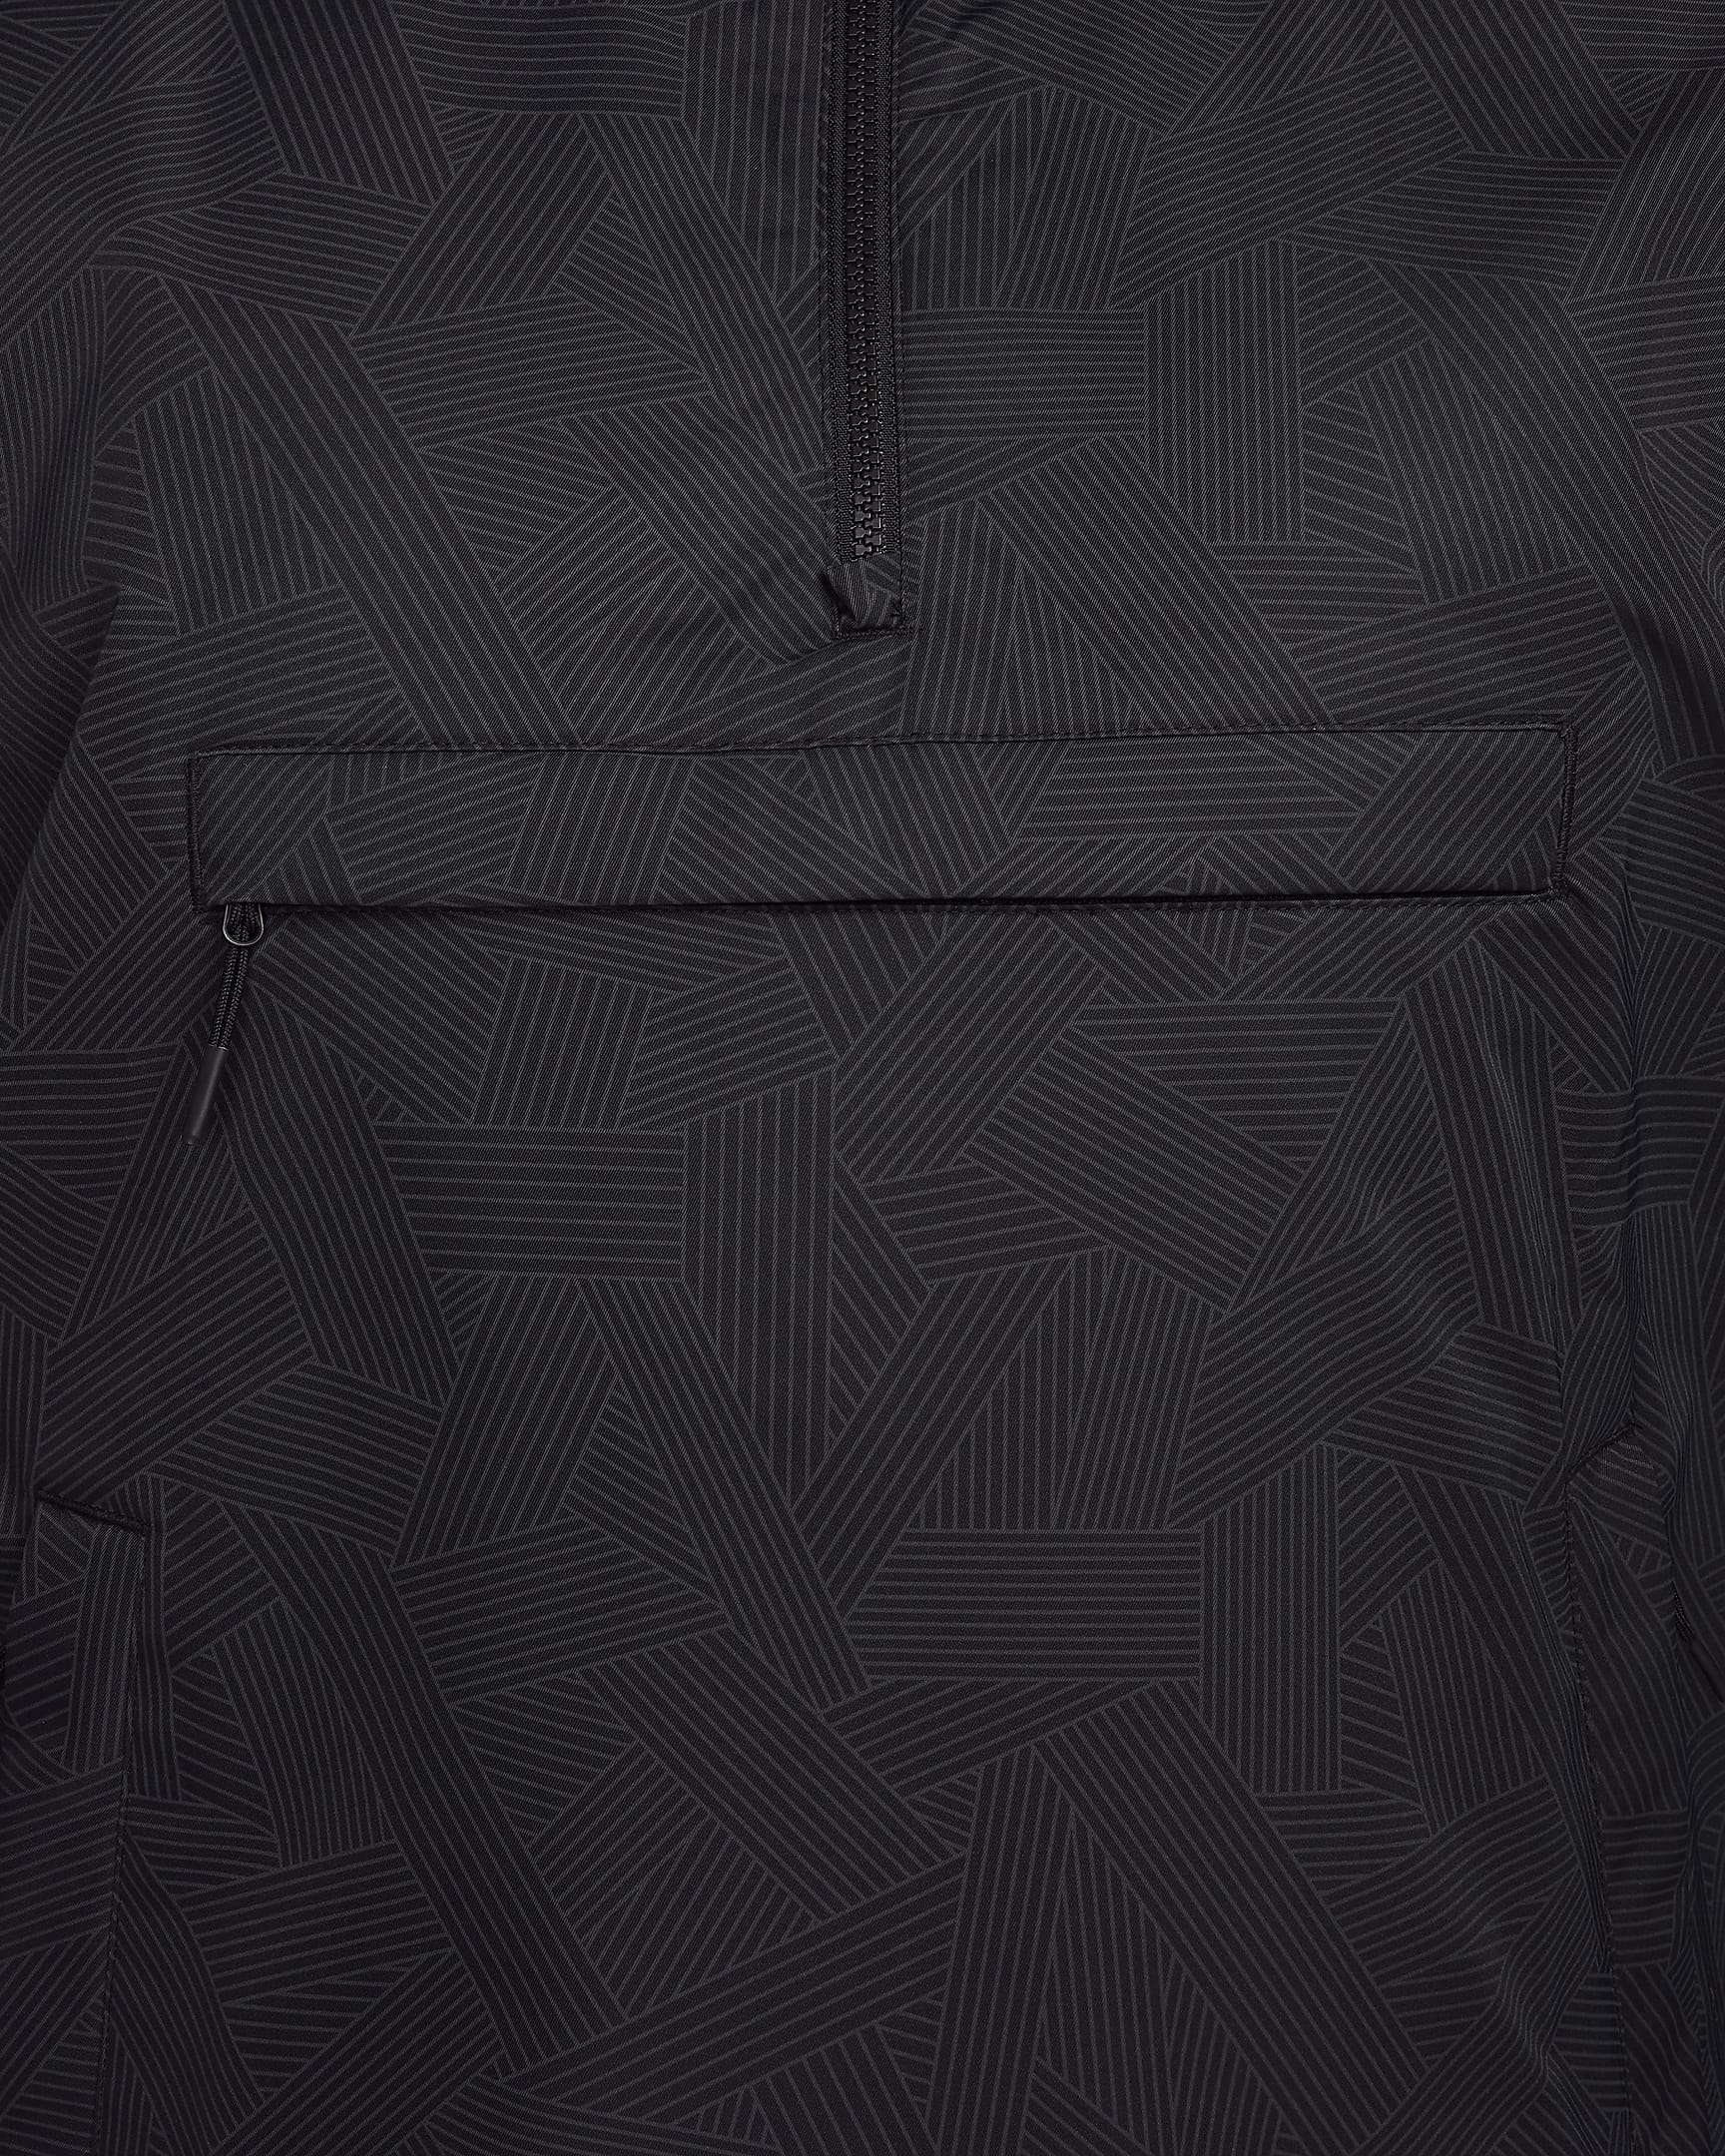 Nike Unscripted Repel Erkek Anorak Golf Ceketi - Siyah/Beyaz